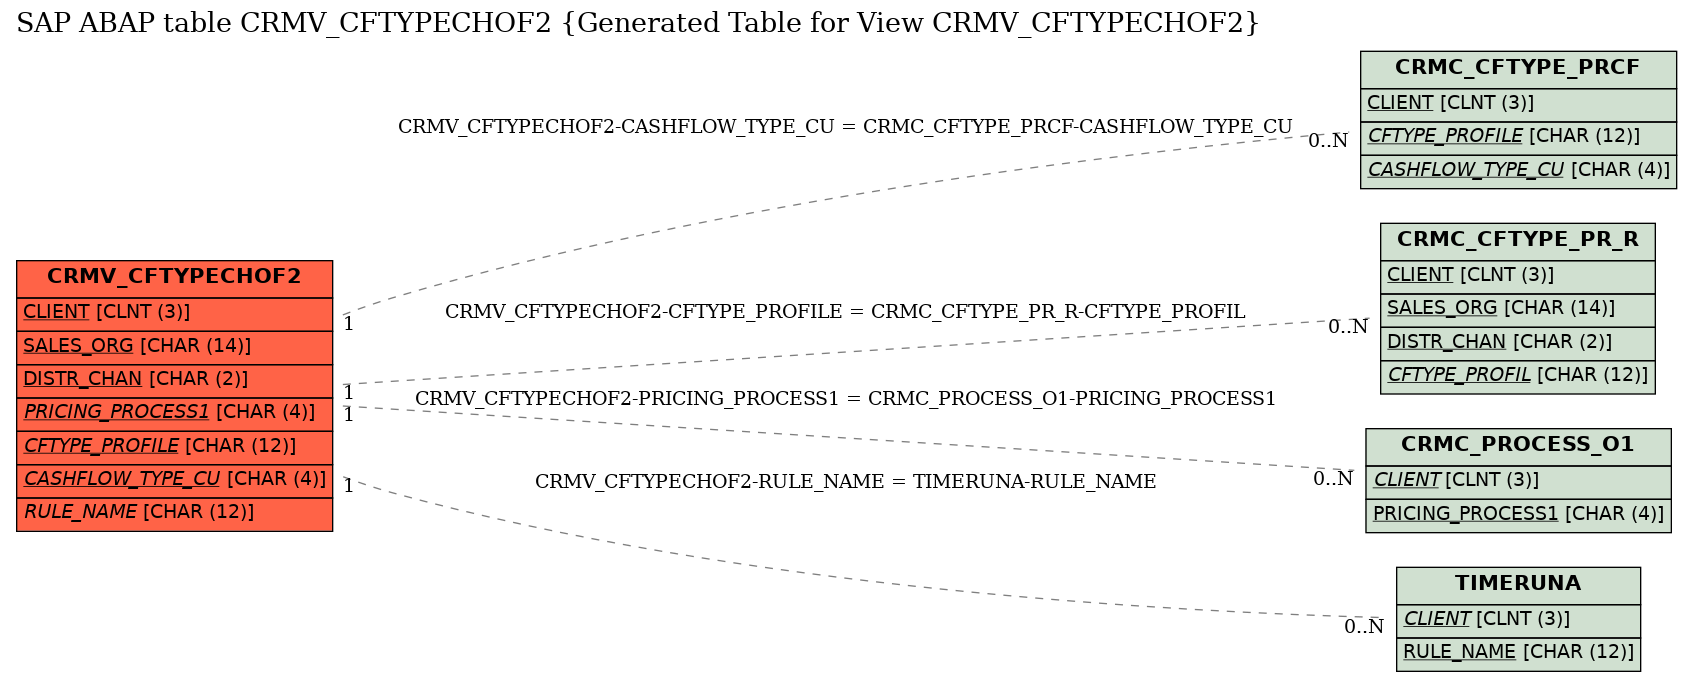 E-R Diagram for table CRMV_CFTYPECHOF2 (Generated Table for View CRMV_CFTYPECHOF2)